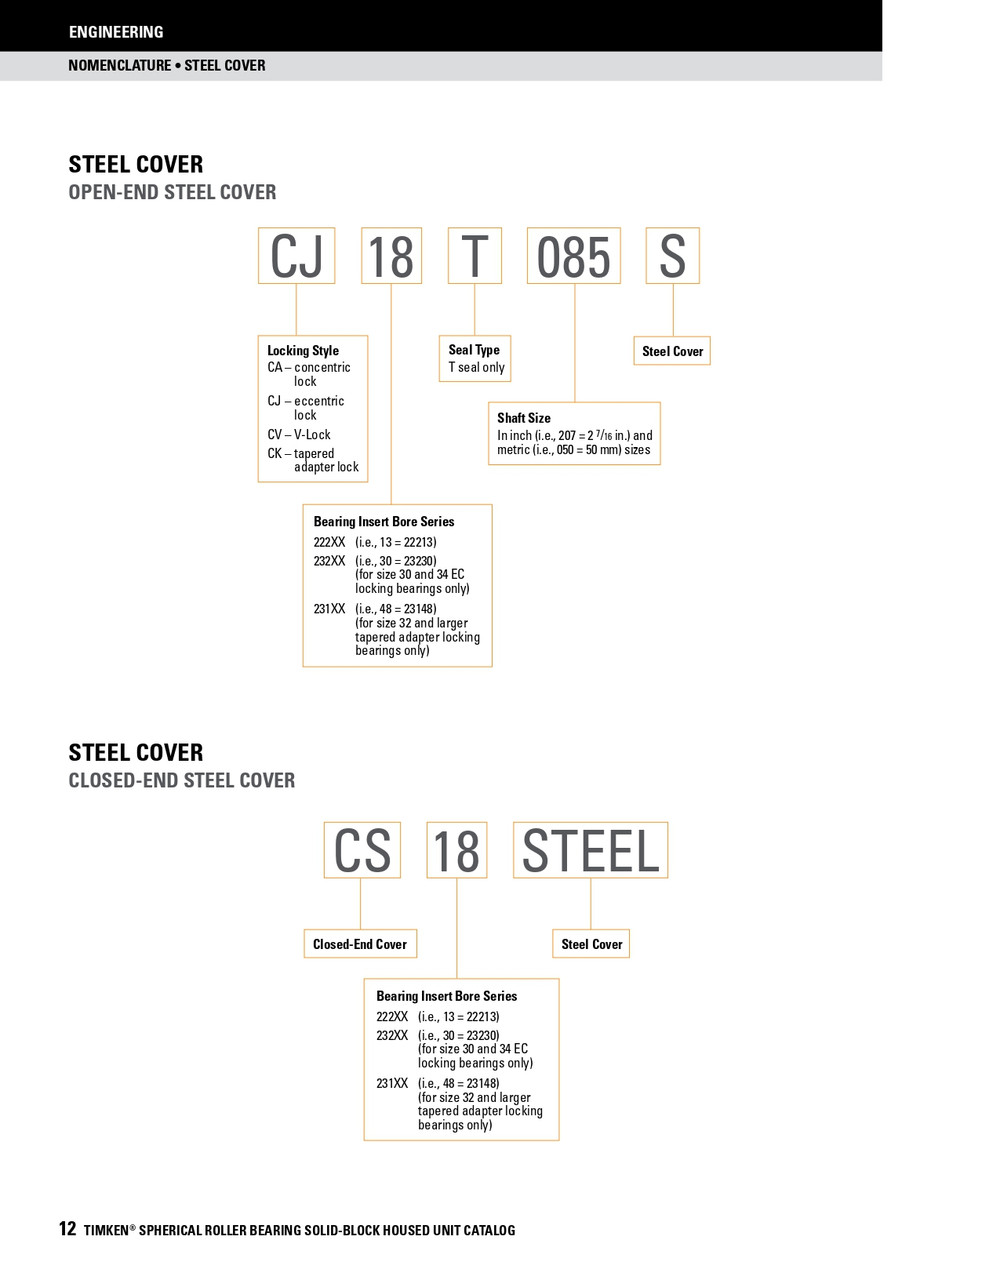 2-3/16" Timken SRB Steel Open End Cover w/Teflon Seal - QV V-Lock® Type   CV12T203S